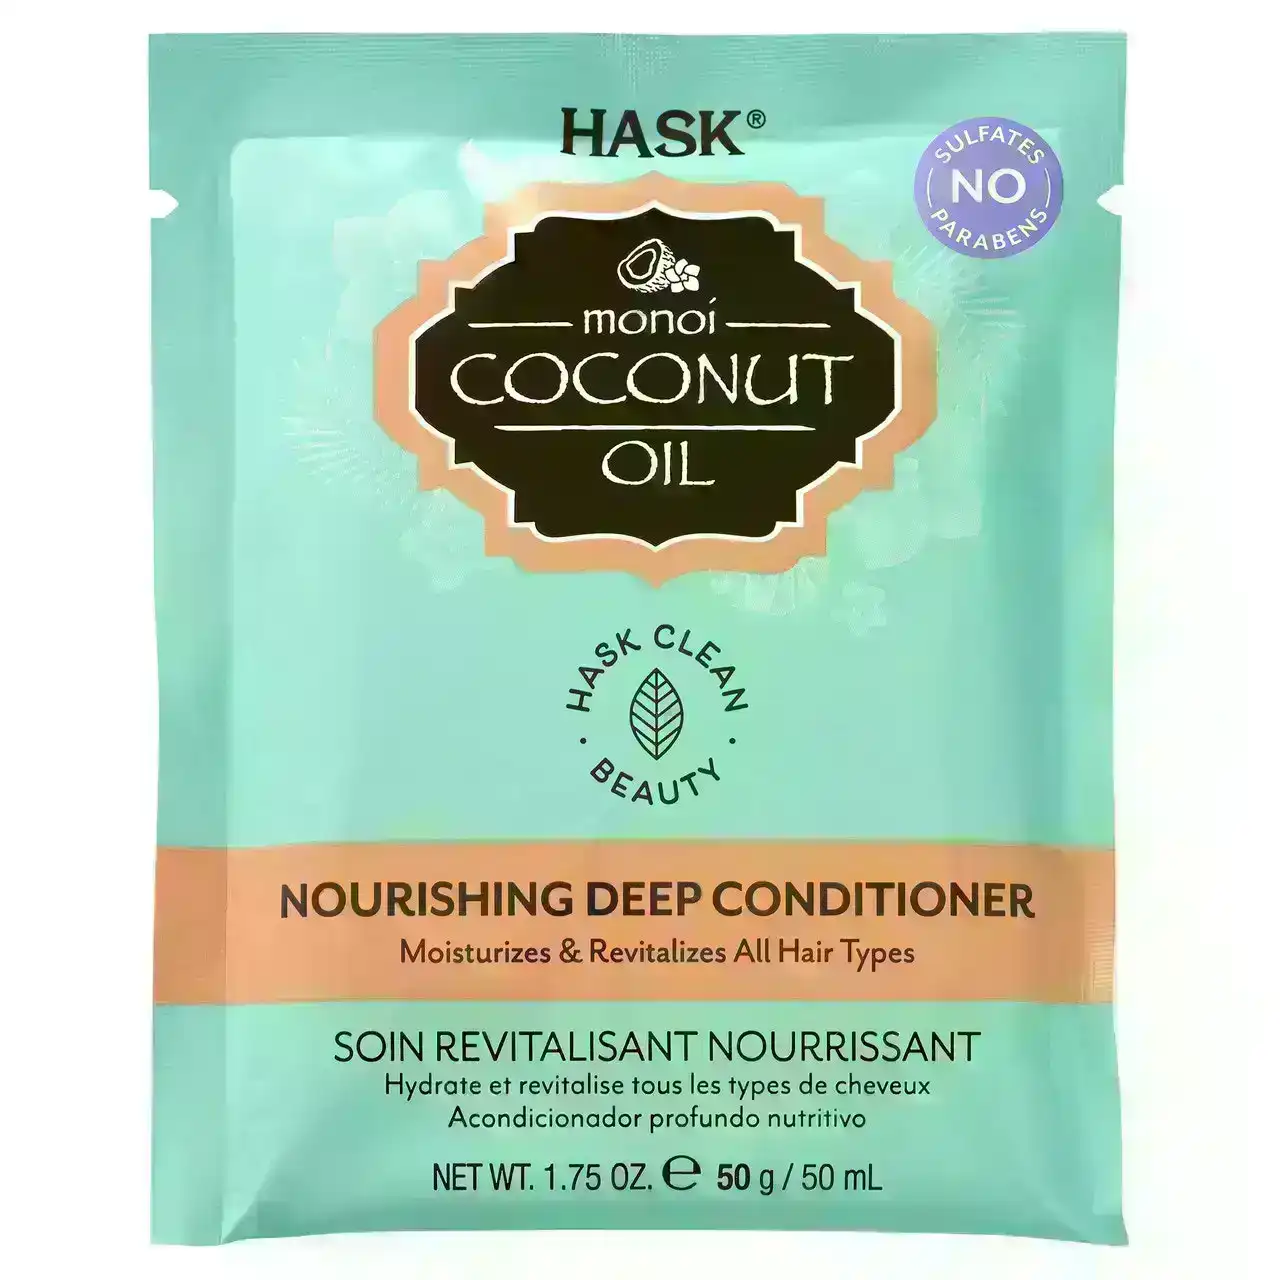 HASK Coconut Oil Nourishing Deep Conditioner 50g